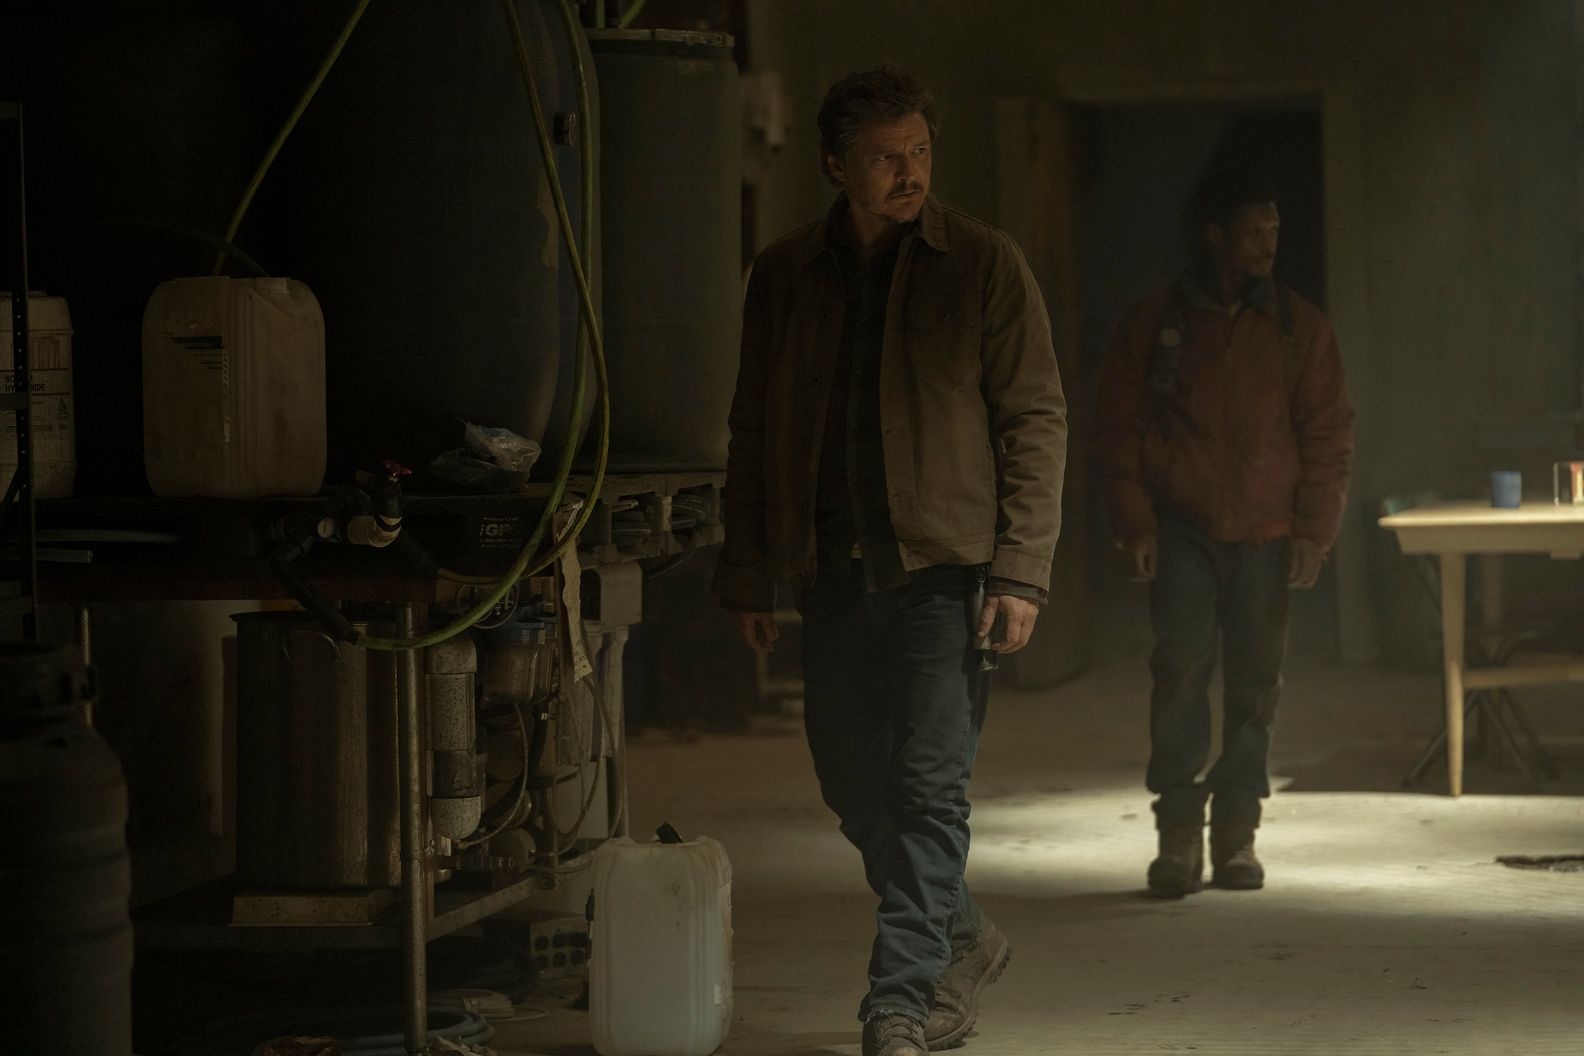 Joel and Henry on patrol in The Last of Us season 1 episode 5